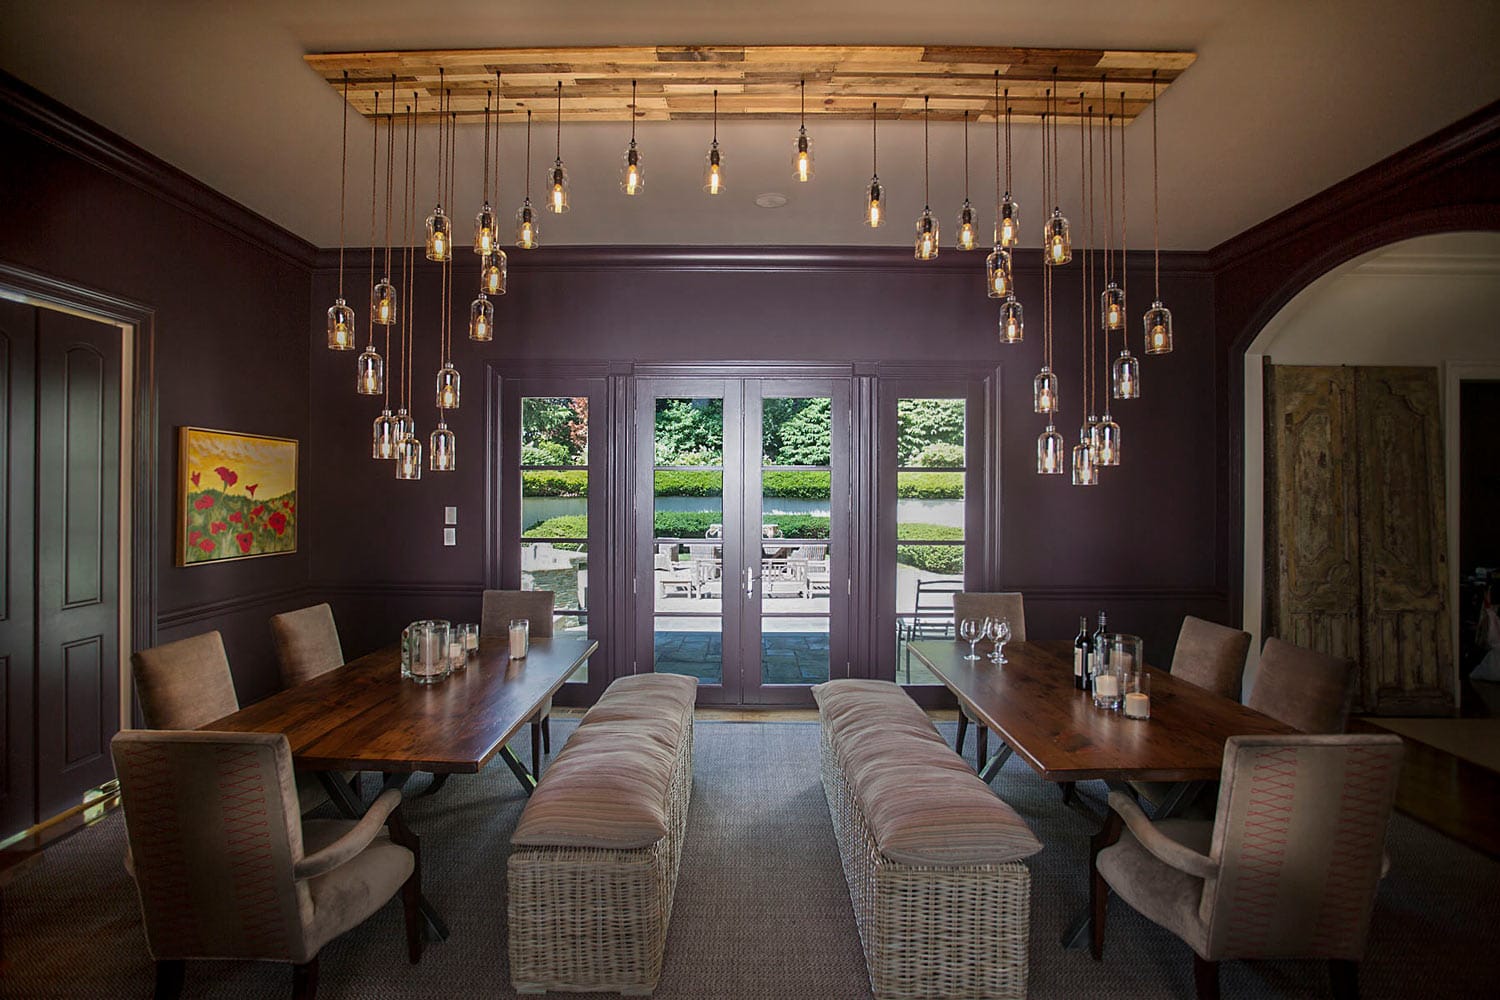 Harriman estates dining room in Sands Points designed by Annette Jaffe Interiors